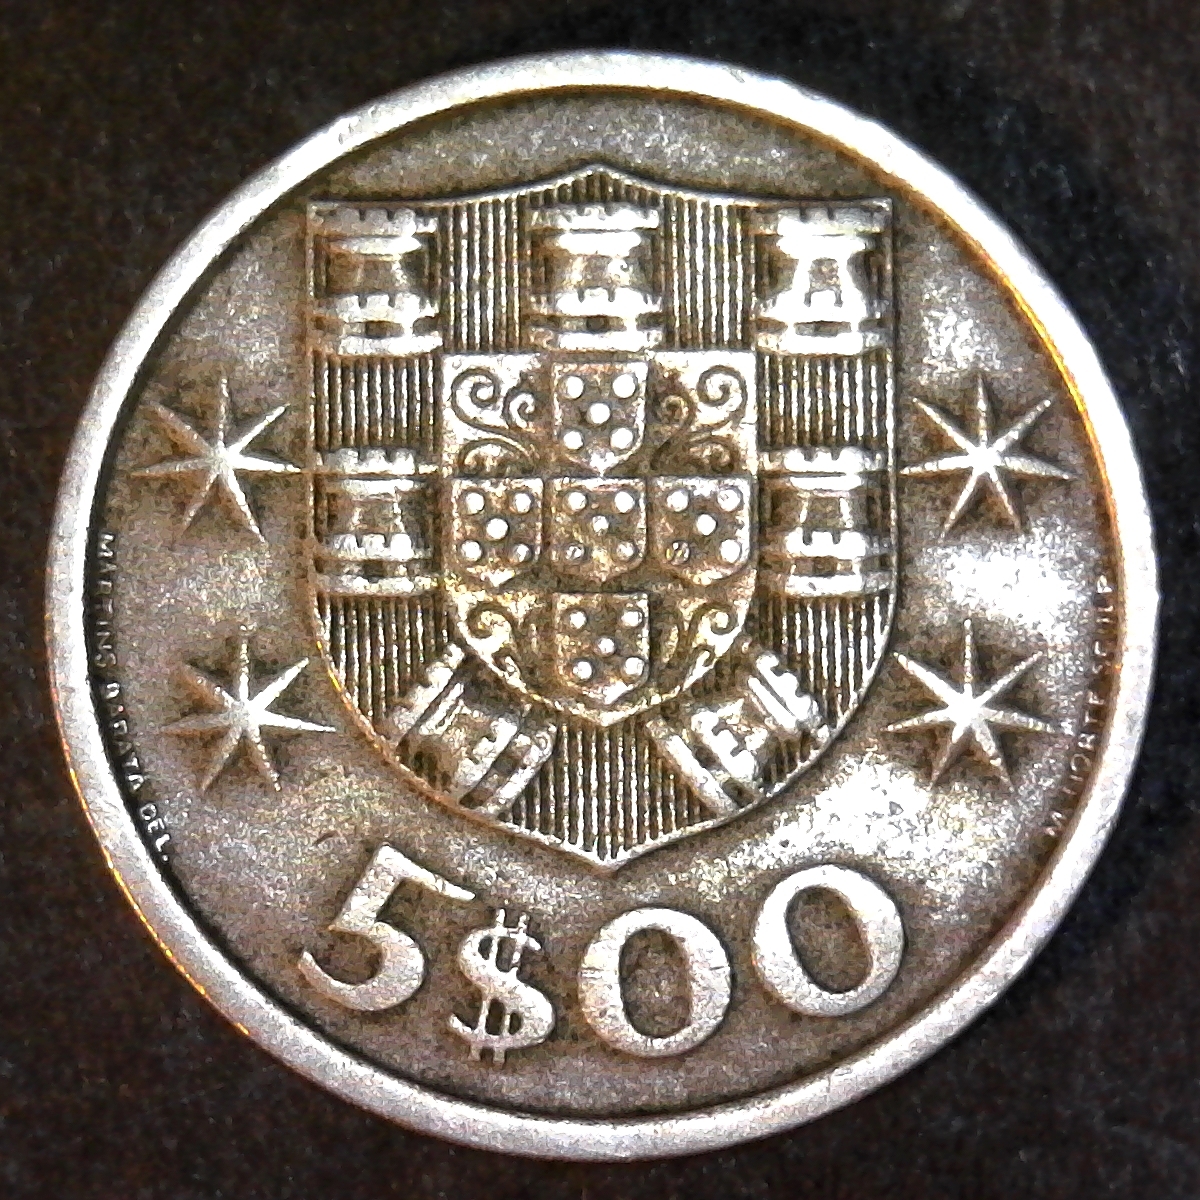 Portugal 5 Escudo 1965 reverse.jpg